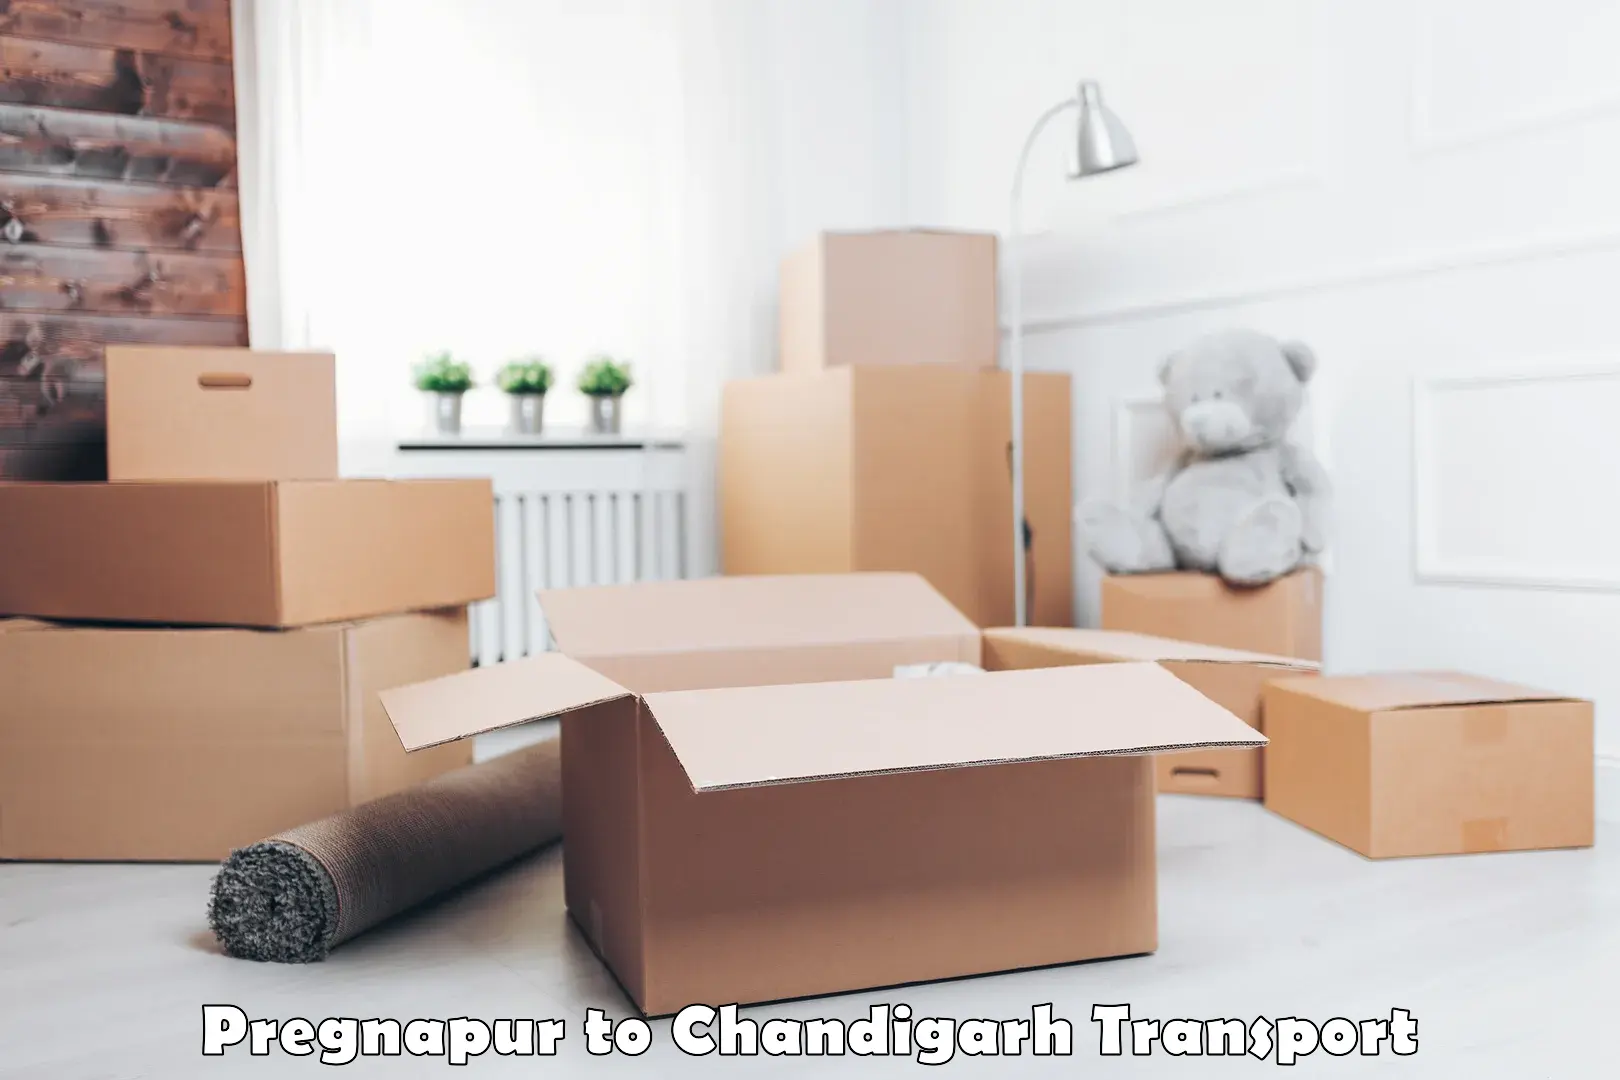 International cargo transportation services Pregnapur to Chandigarh